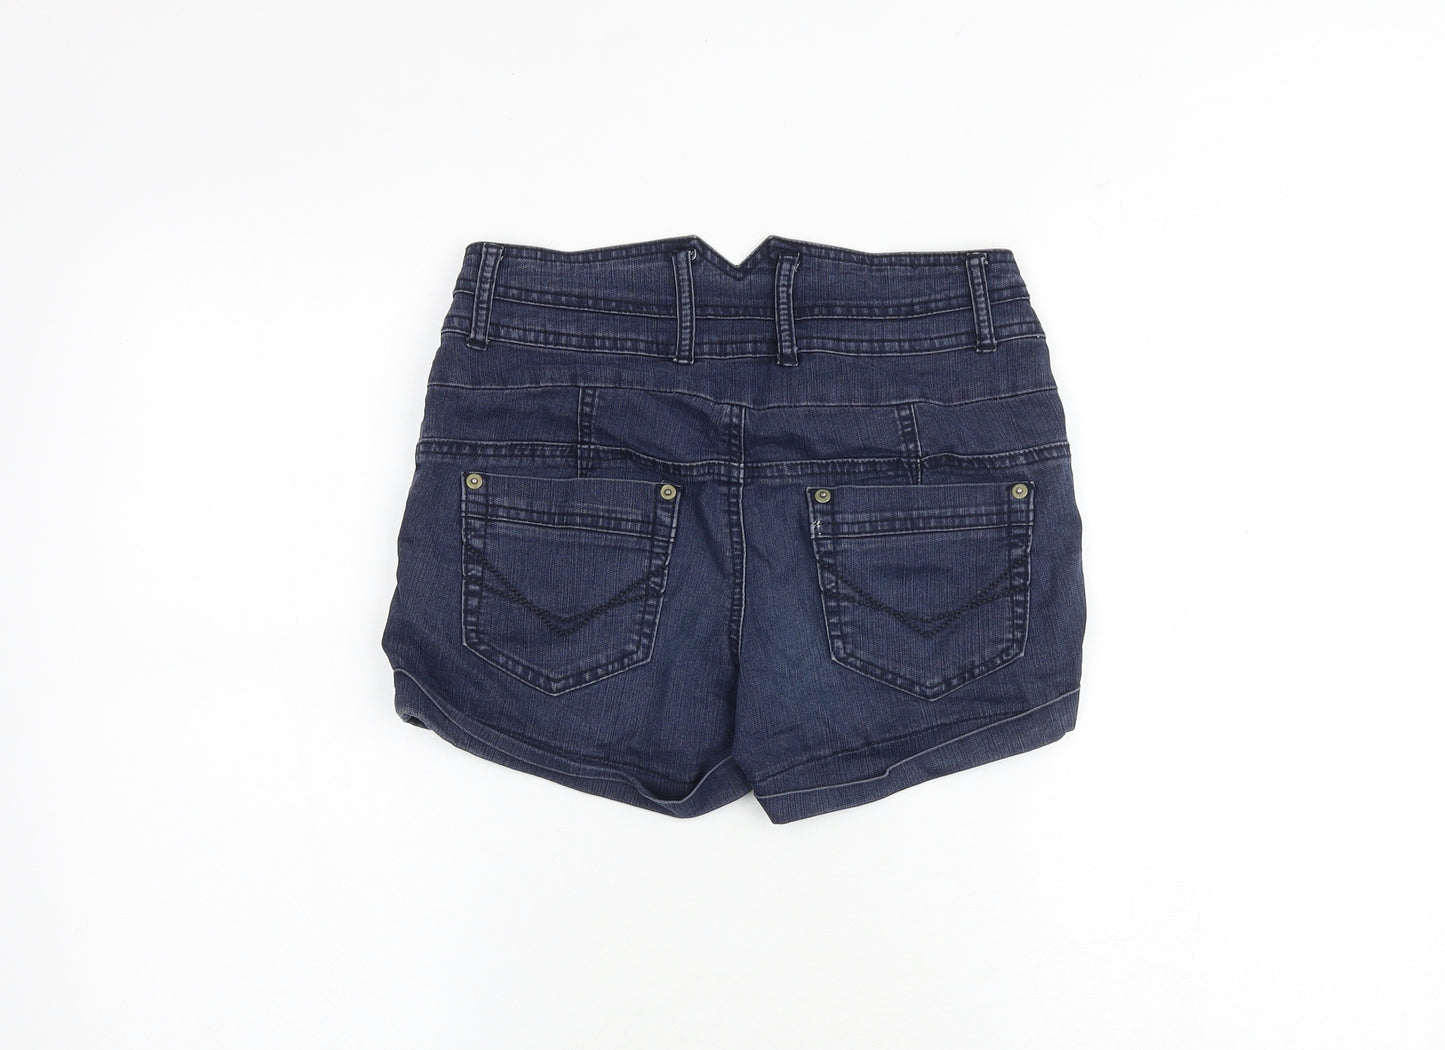 YESYES Womens Blue Cotton Chino Shorts Size 6 Regular Zip